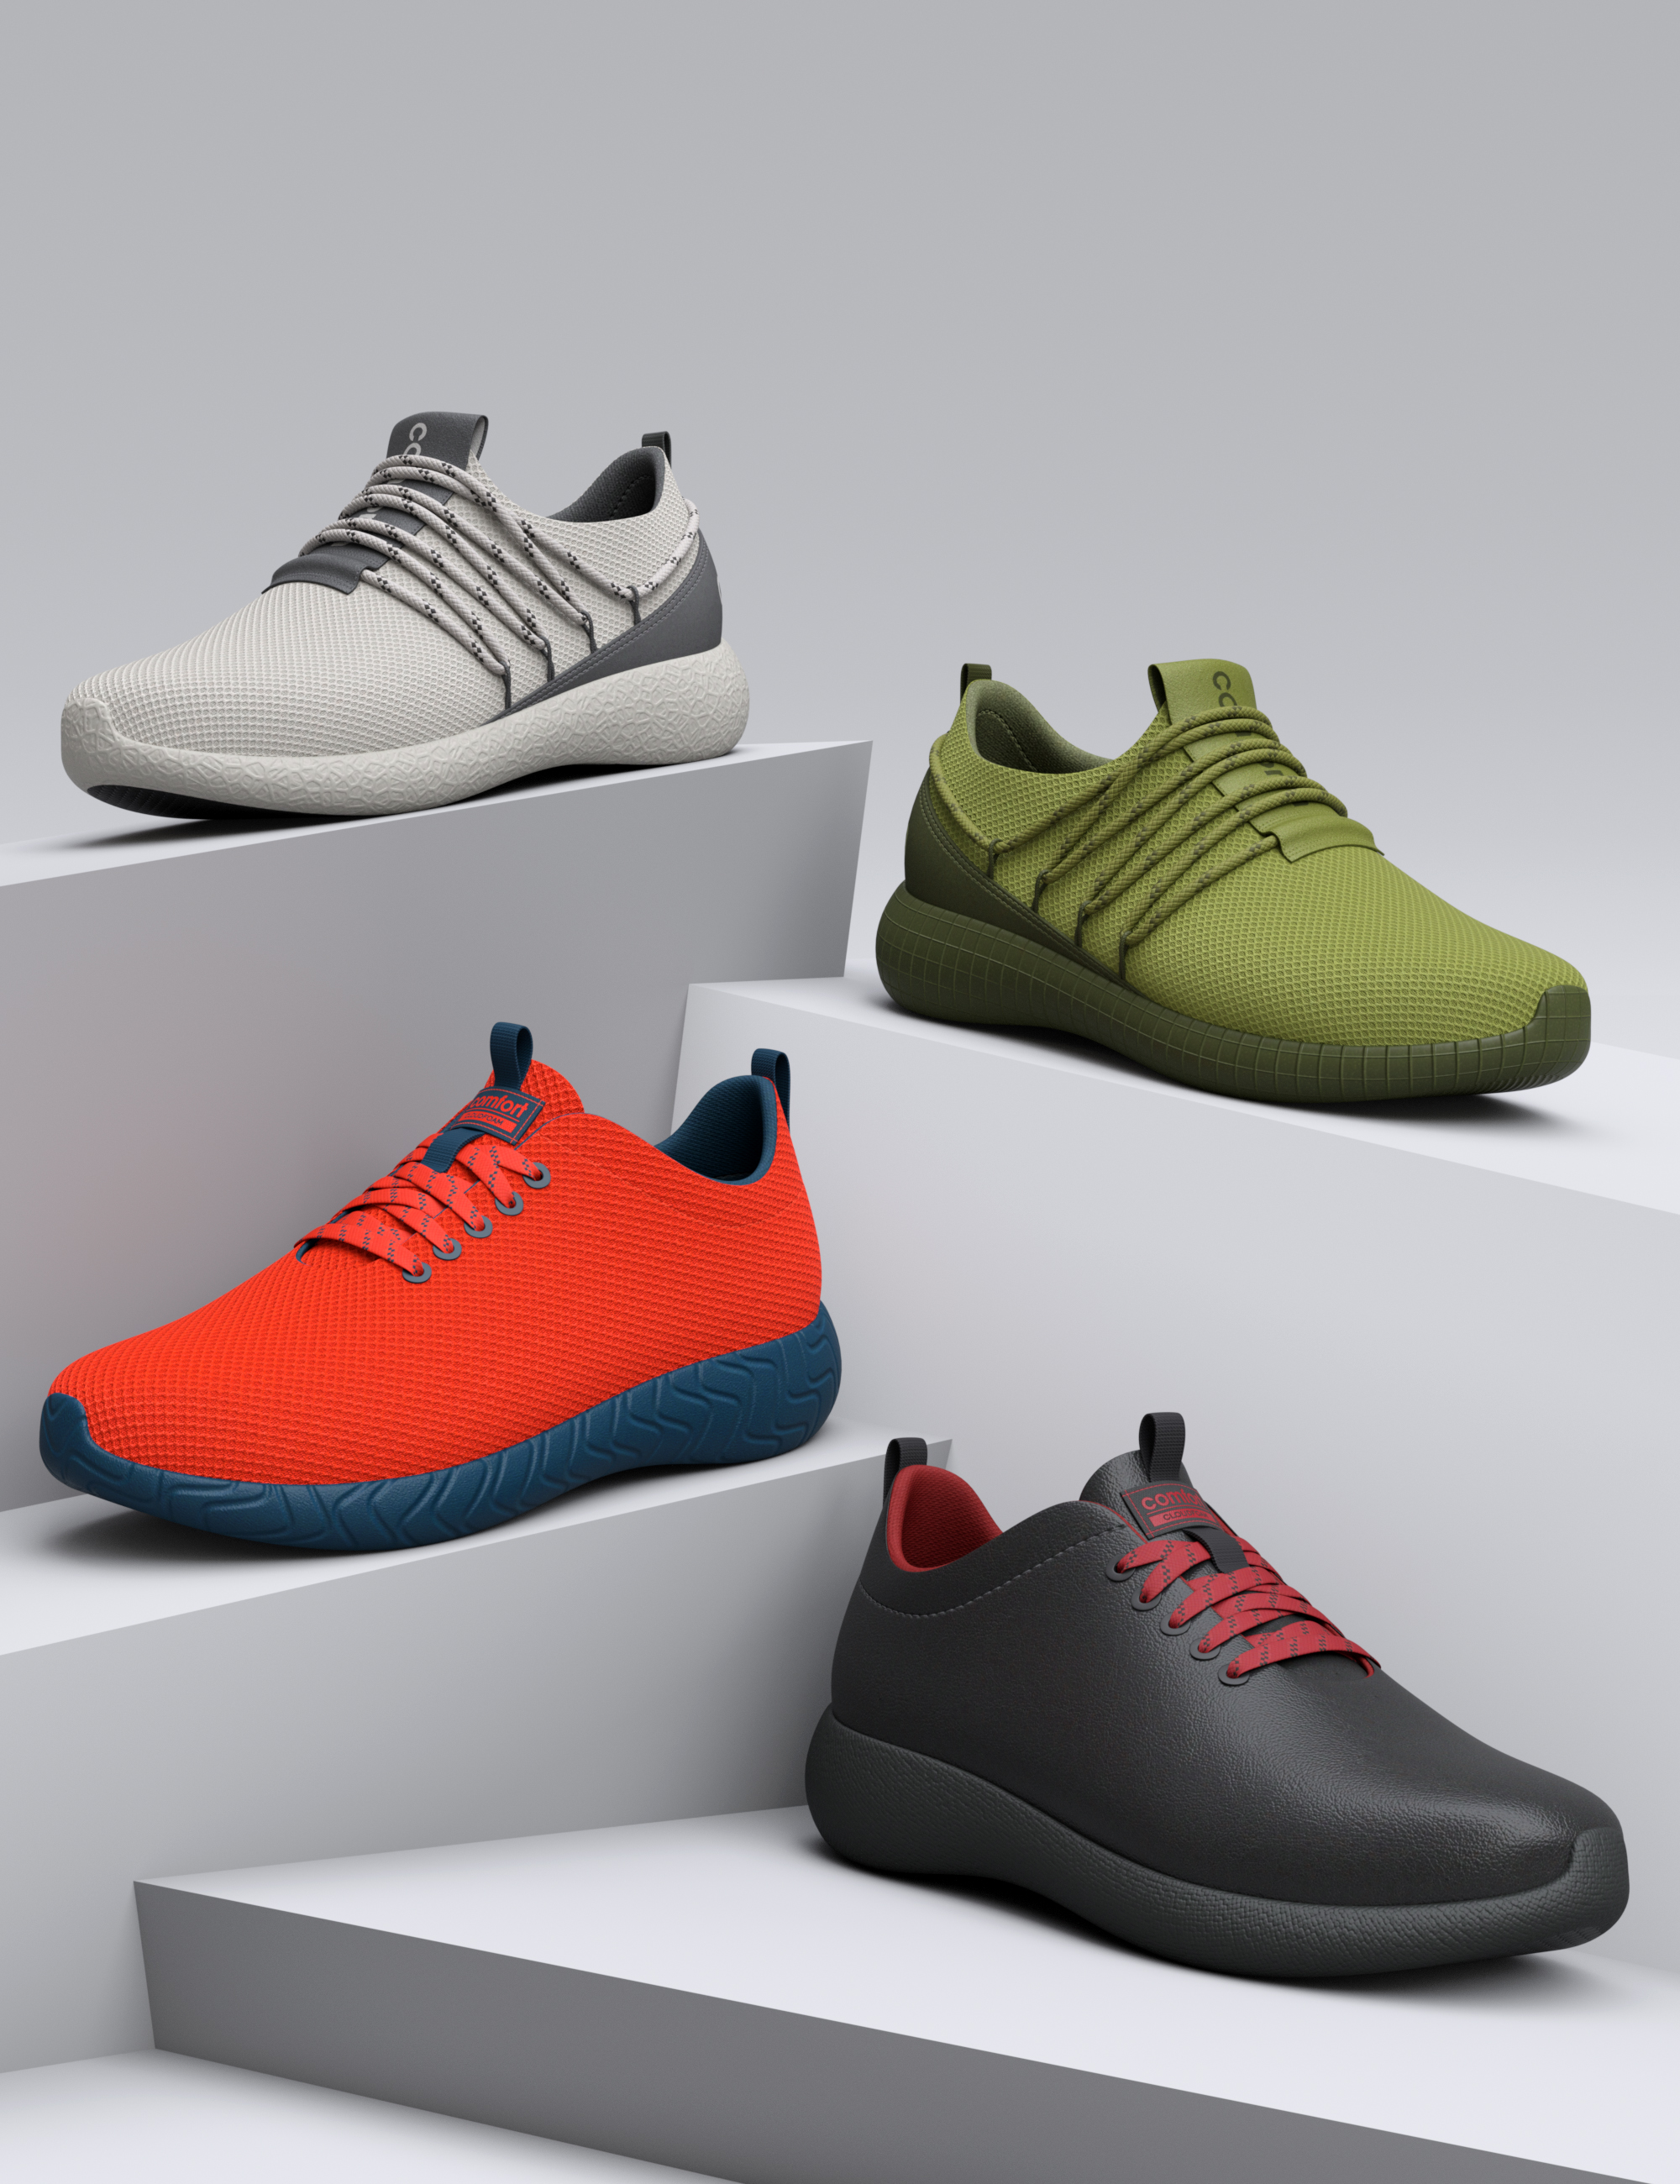 HL Sneakers for Genesis 9 by: Havanalibere, 3D Models by Daz 3D